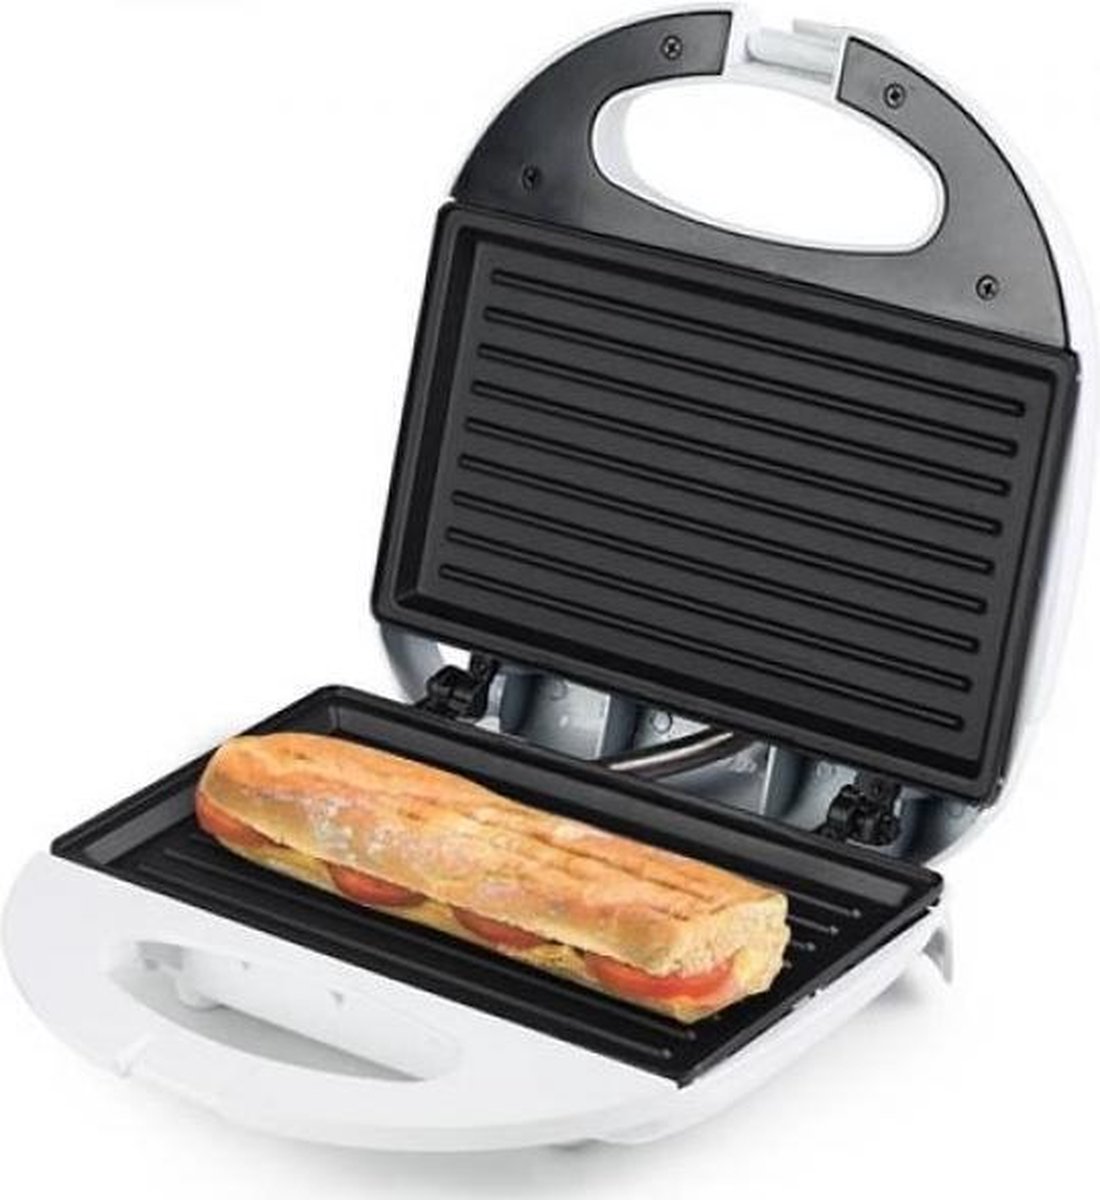 Toast grill